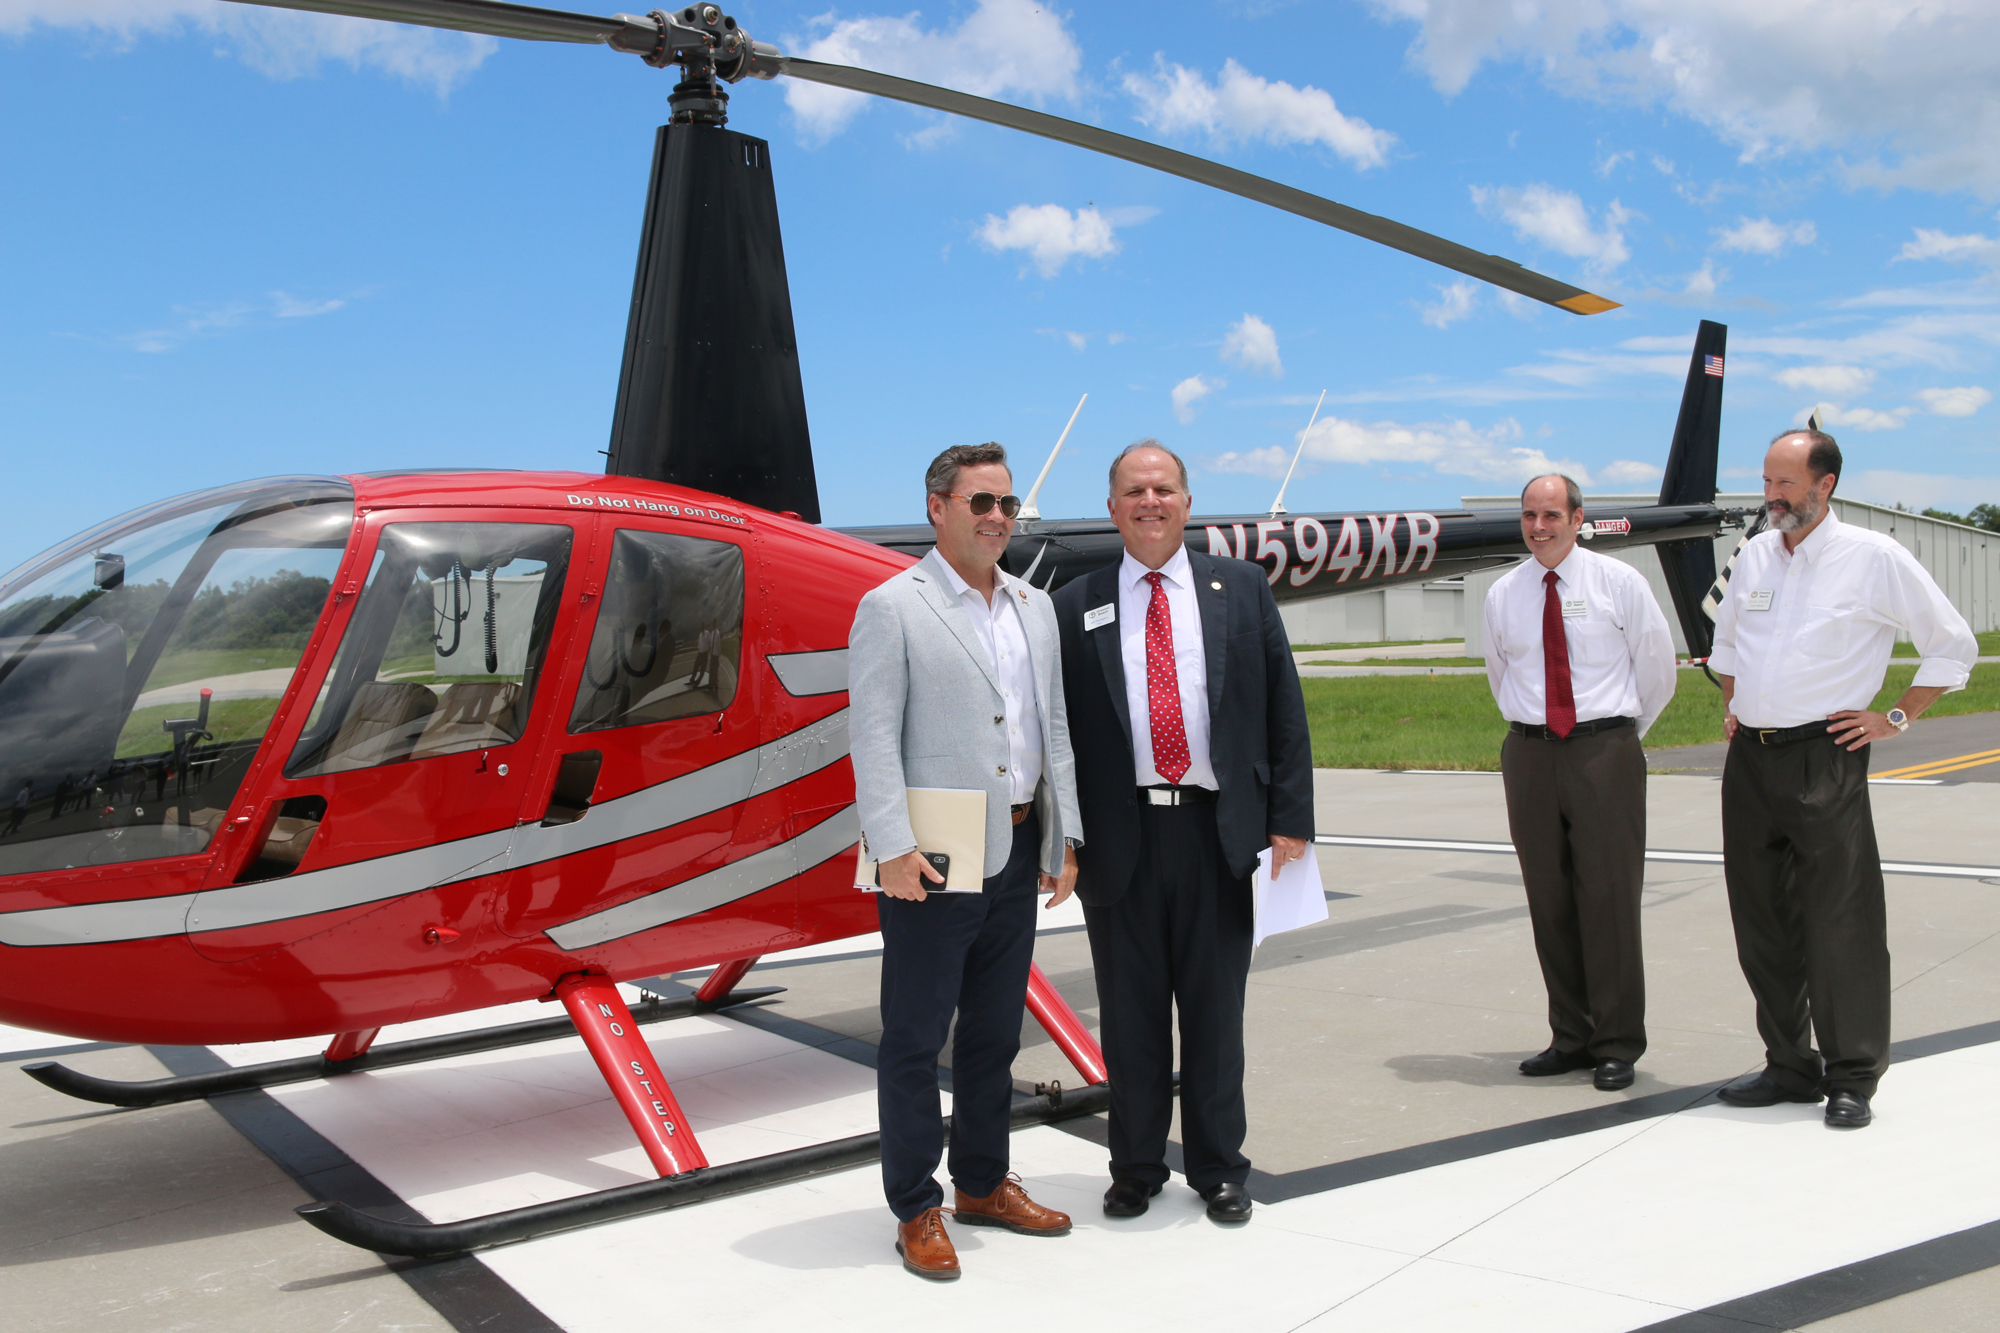 Congressman Michael Waltz and Mayor Bill Partington prepare to board the helicopter as Brian Rademacher and Steven Lichliter watch. Photo by Jarleene Almenas